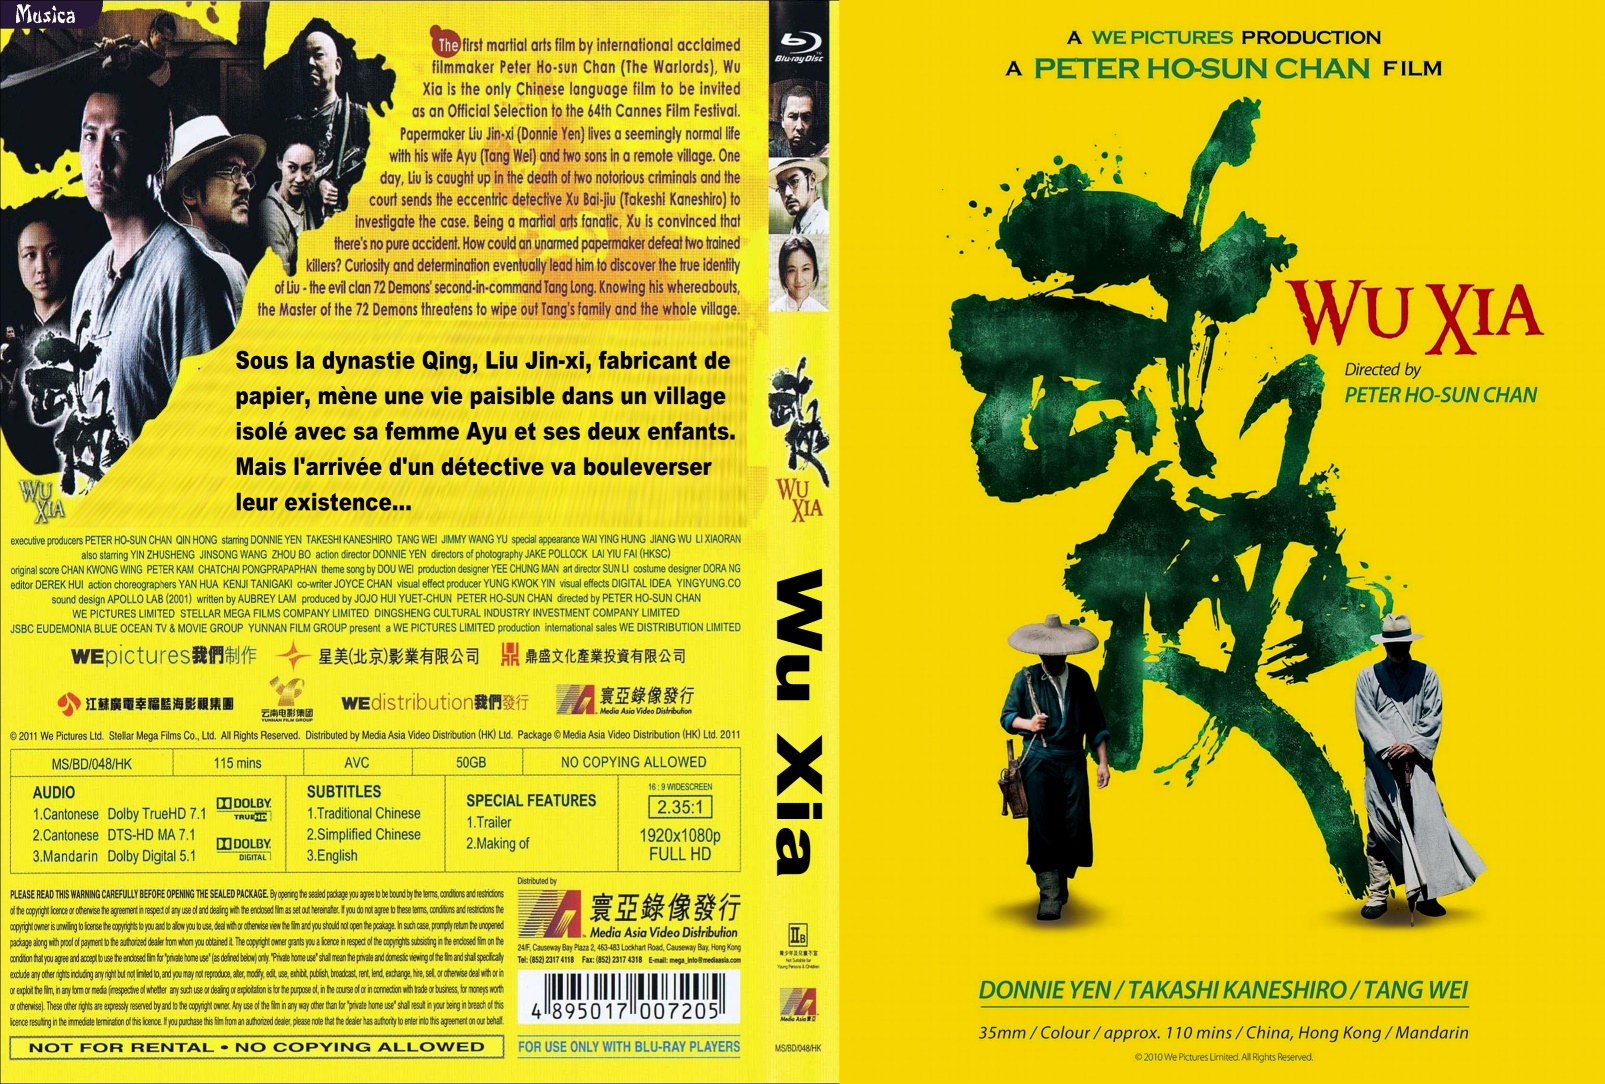 Jaquette DVD Wu Xia custom